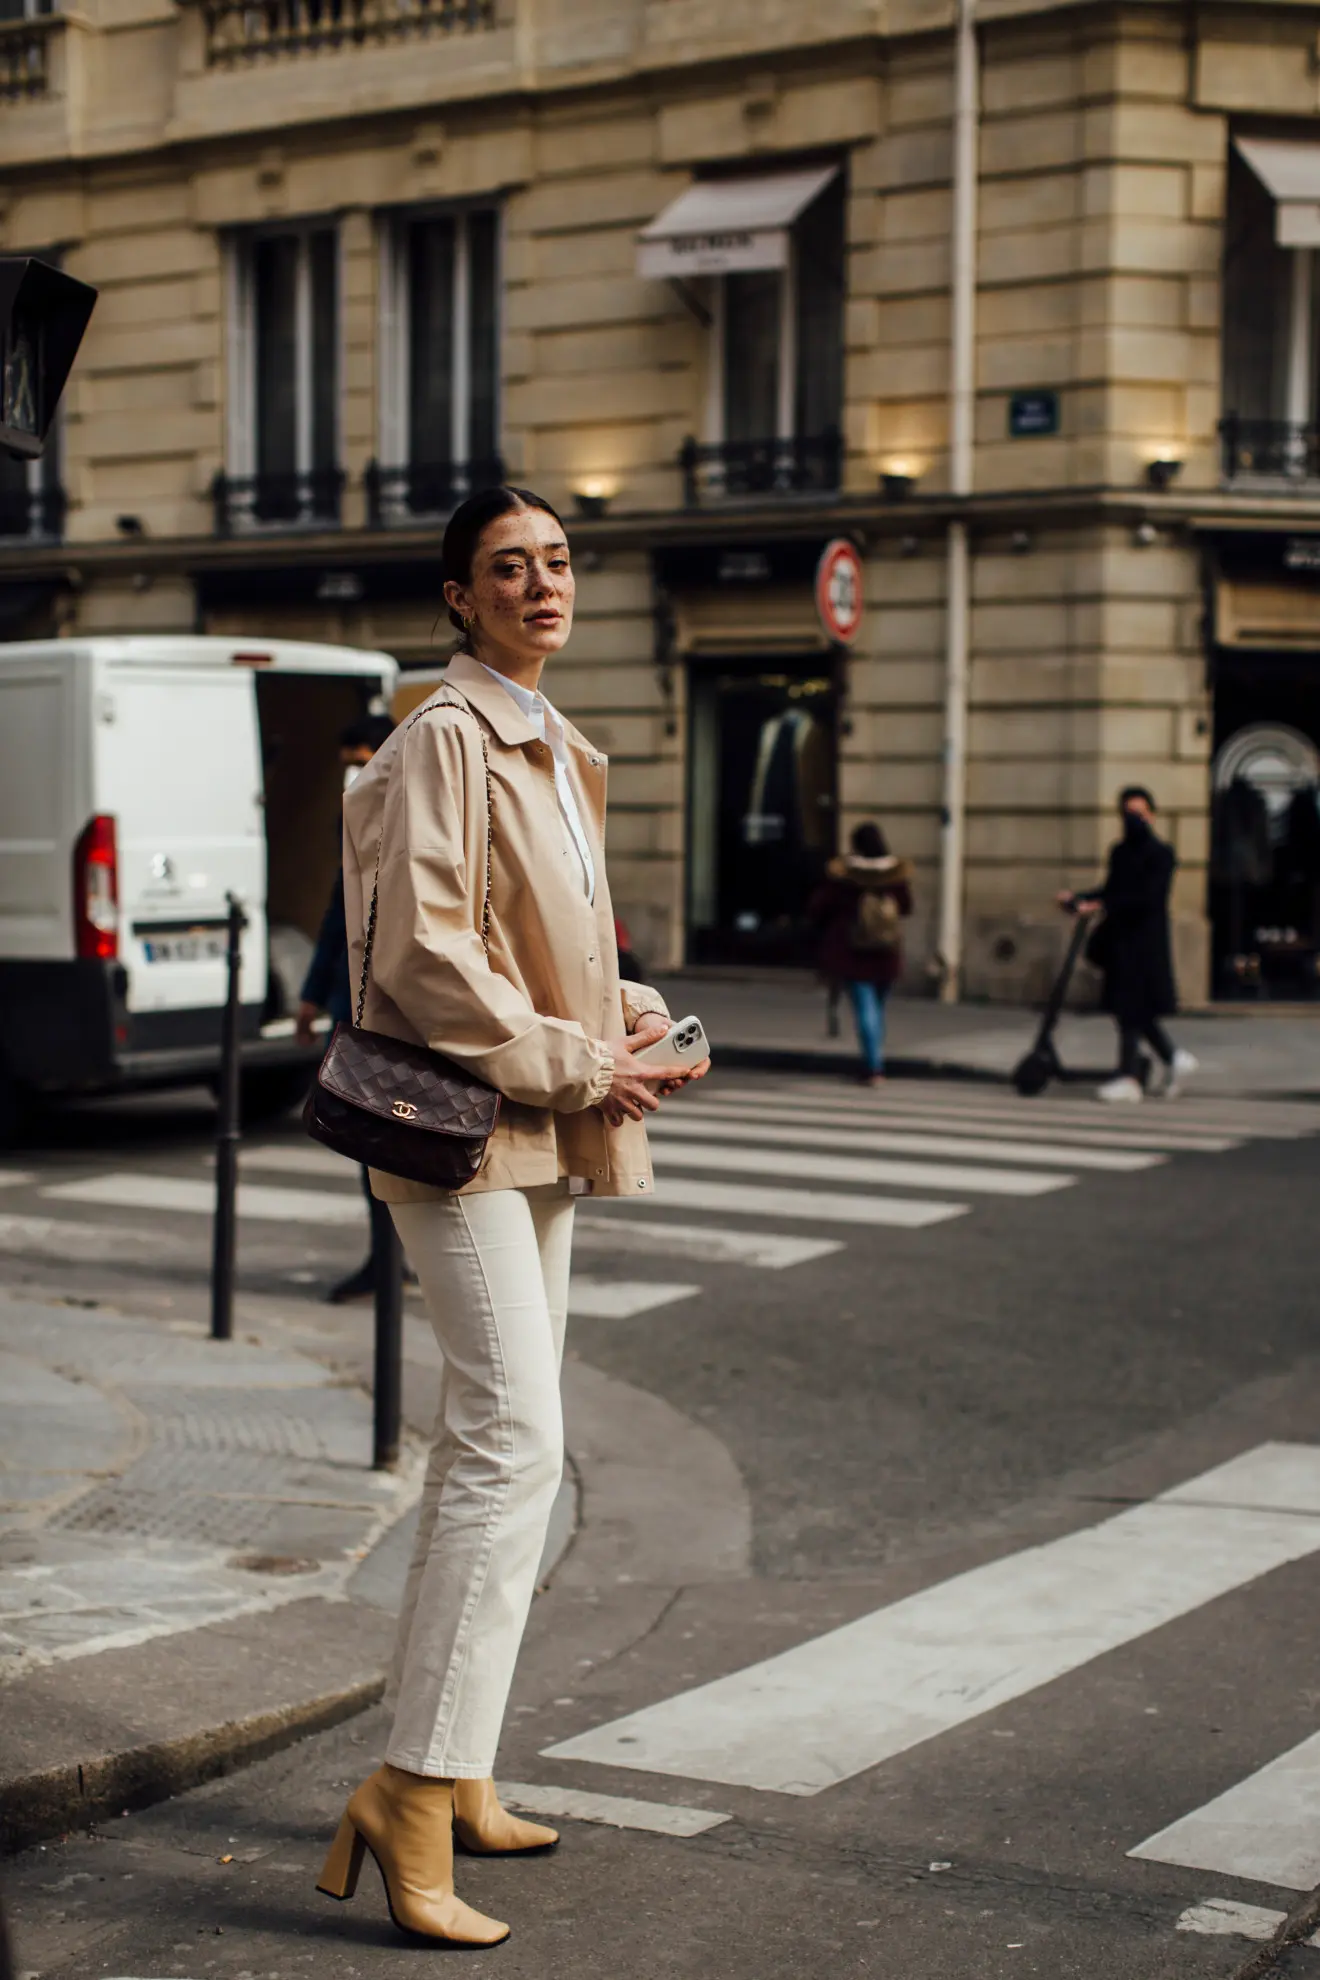 Fashion for over 50s, Hermes bags, Paris street style Paris street